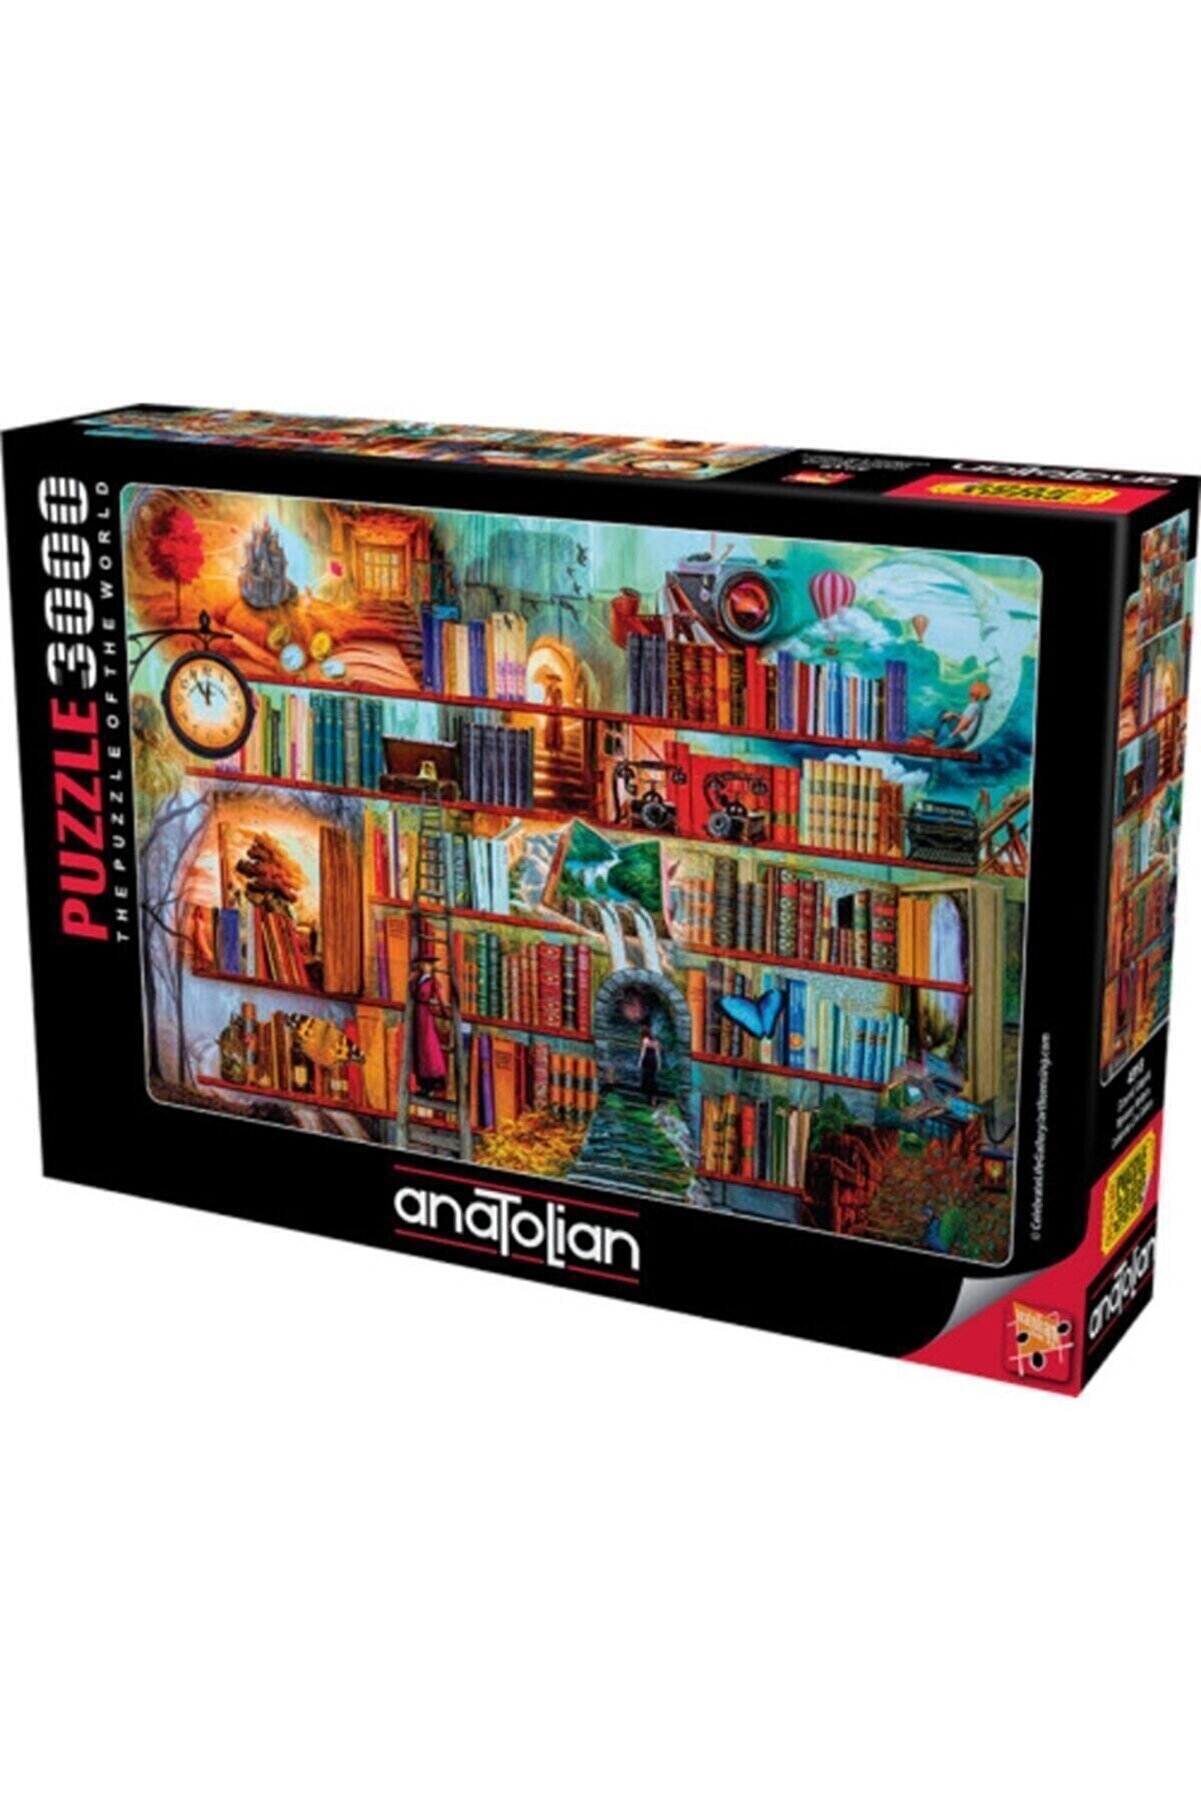 Anatolian Puzzle Gizemli Kitaplık / 3000 Parçalık Puzzle, Kod:4918